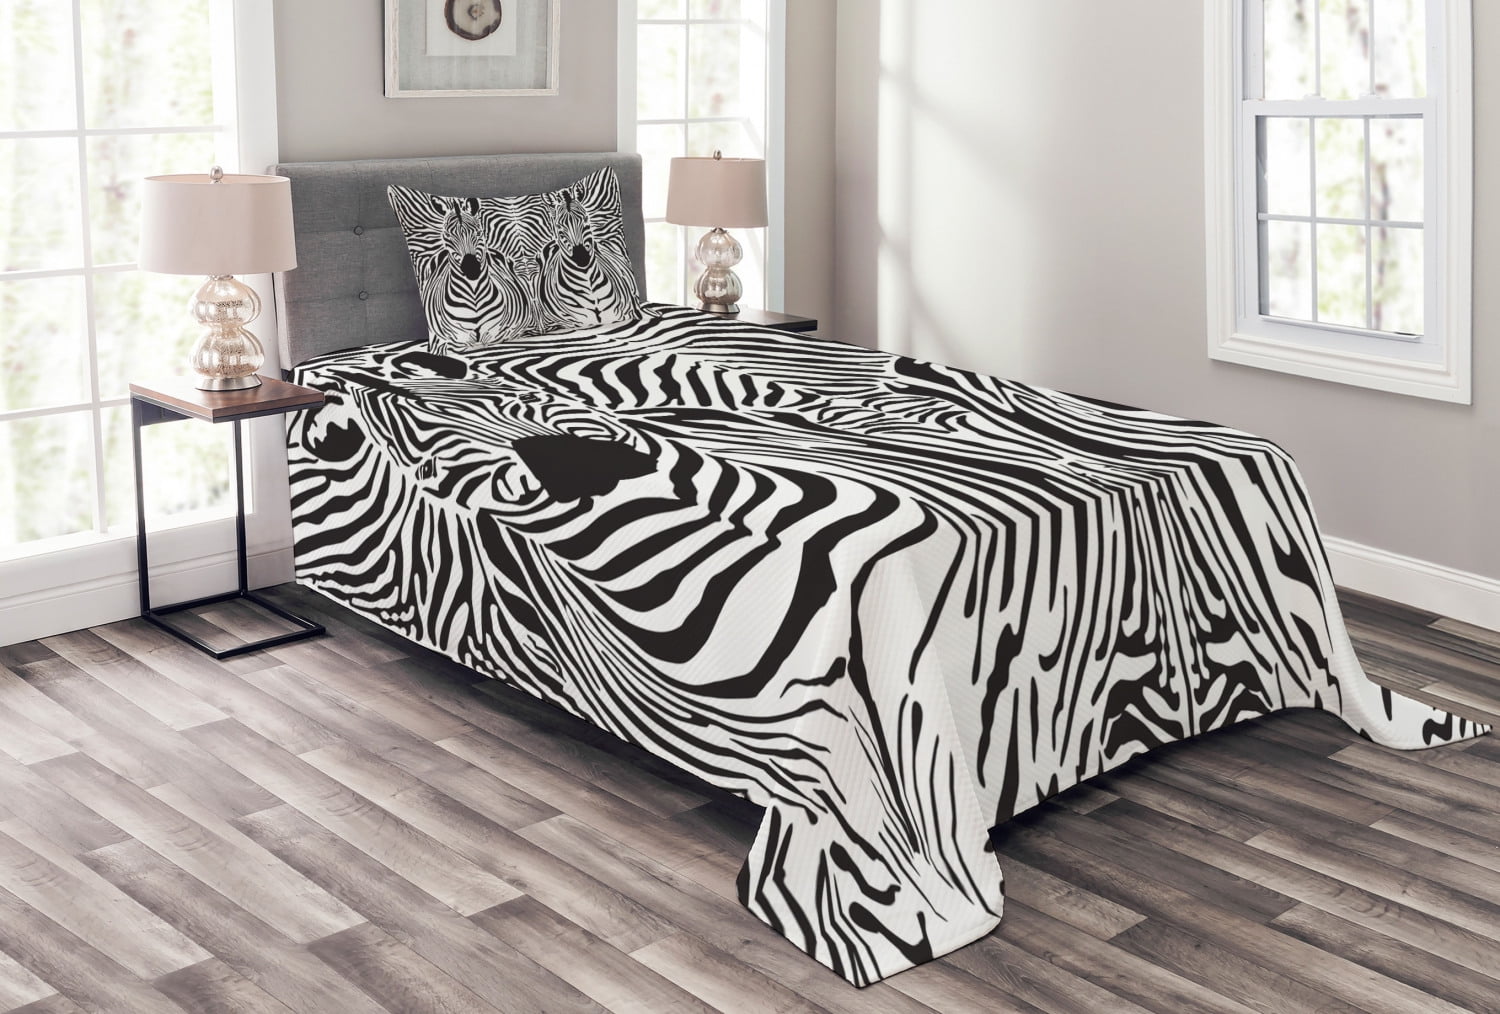 Zebra Print Bedspread Set Twin Size, Illustration Pattern Zebras Skins ...